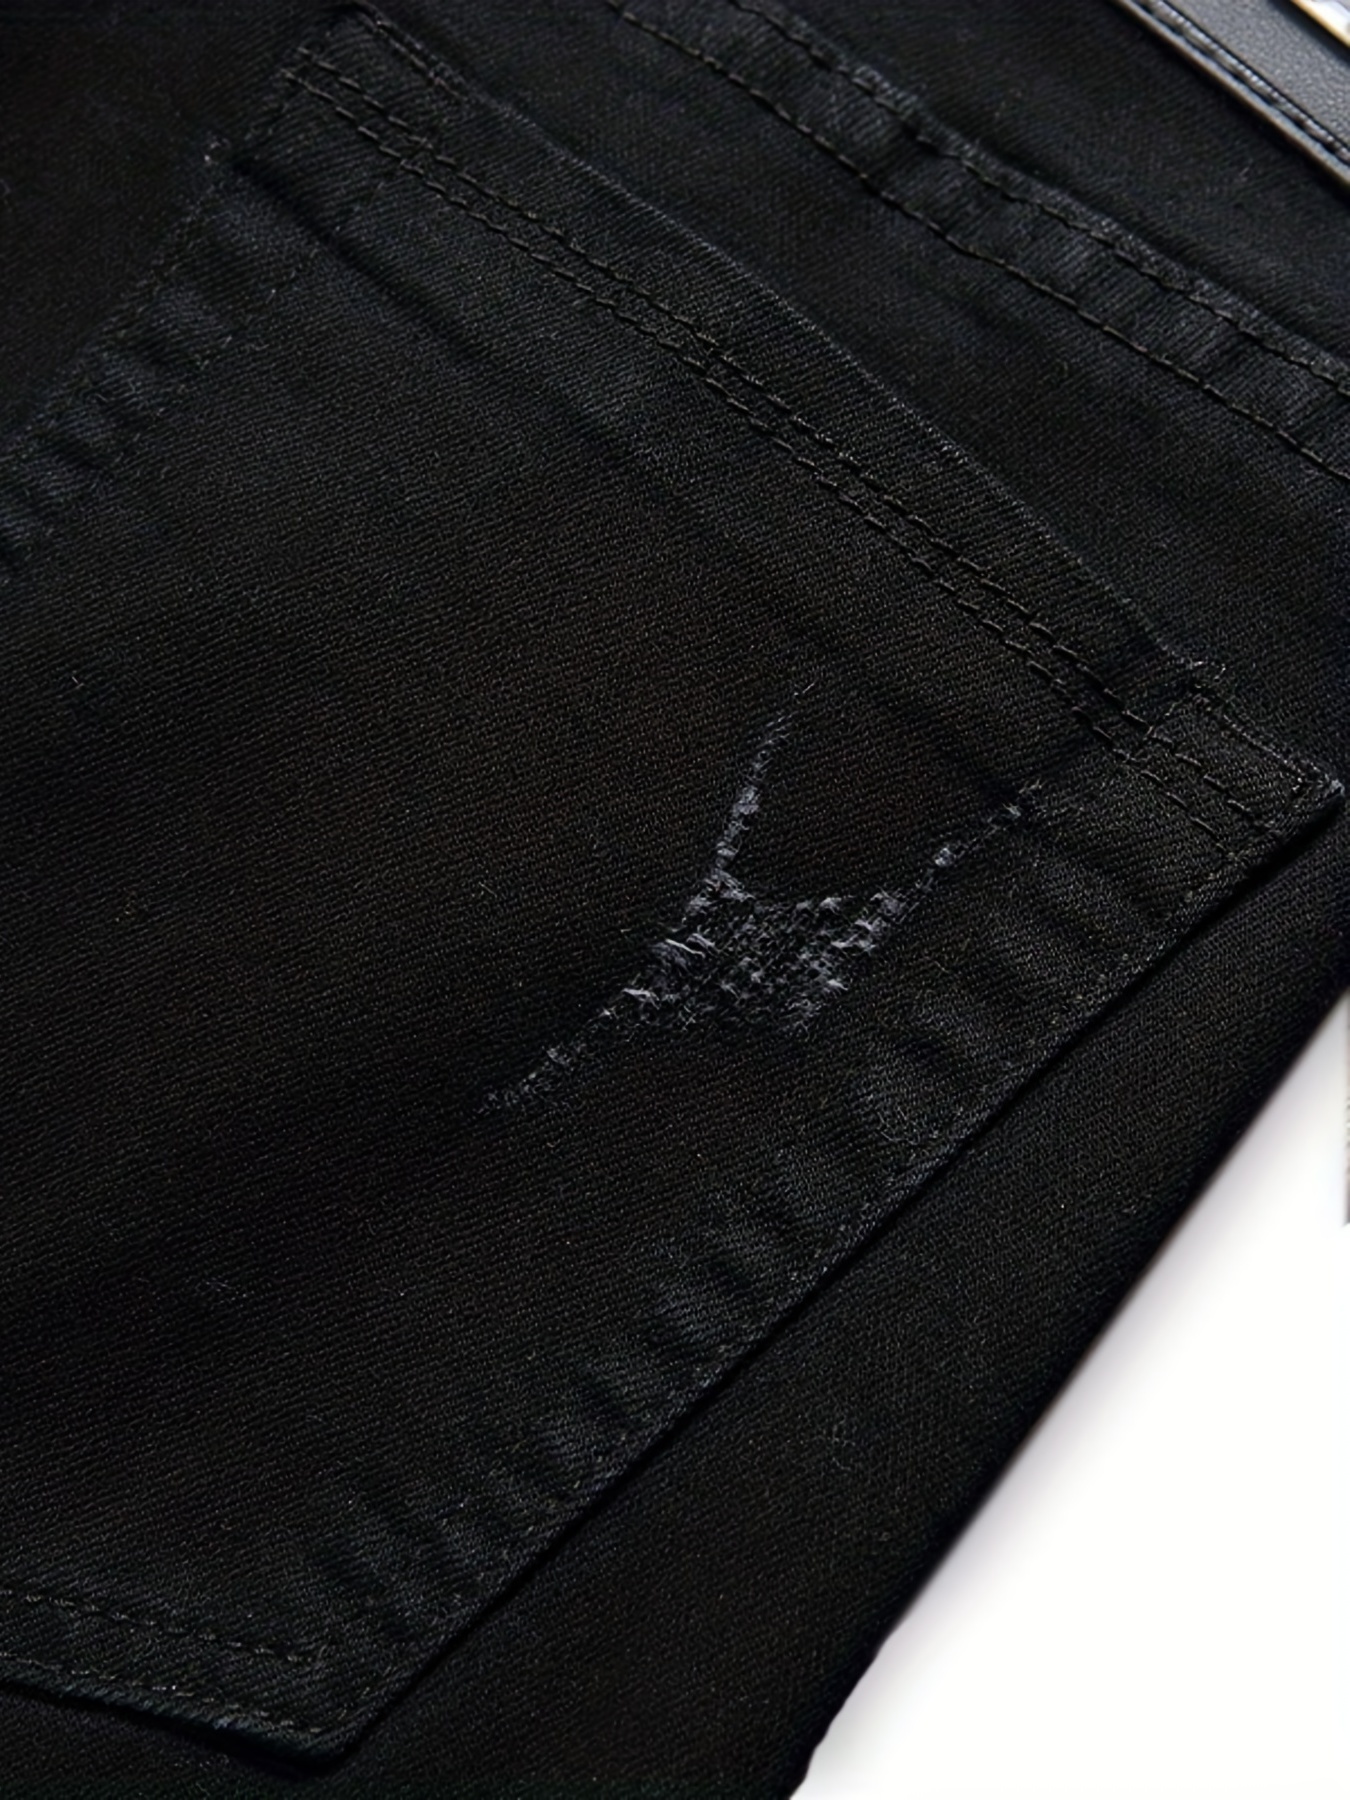 Foto de Pantalones de mezclilla, jeans amontonados, desorden de pantalones  do Stock